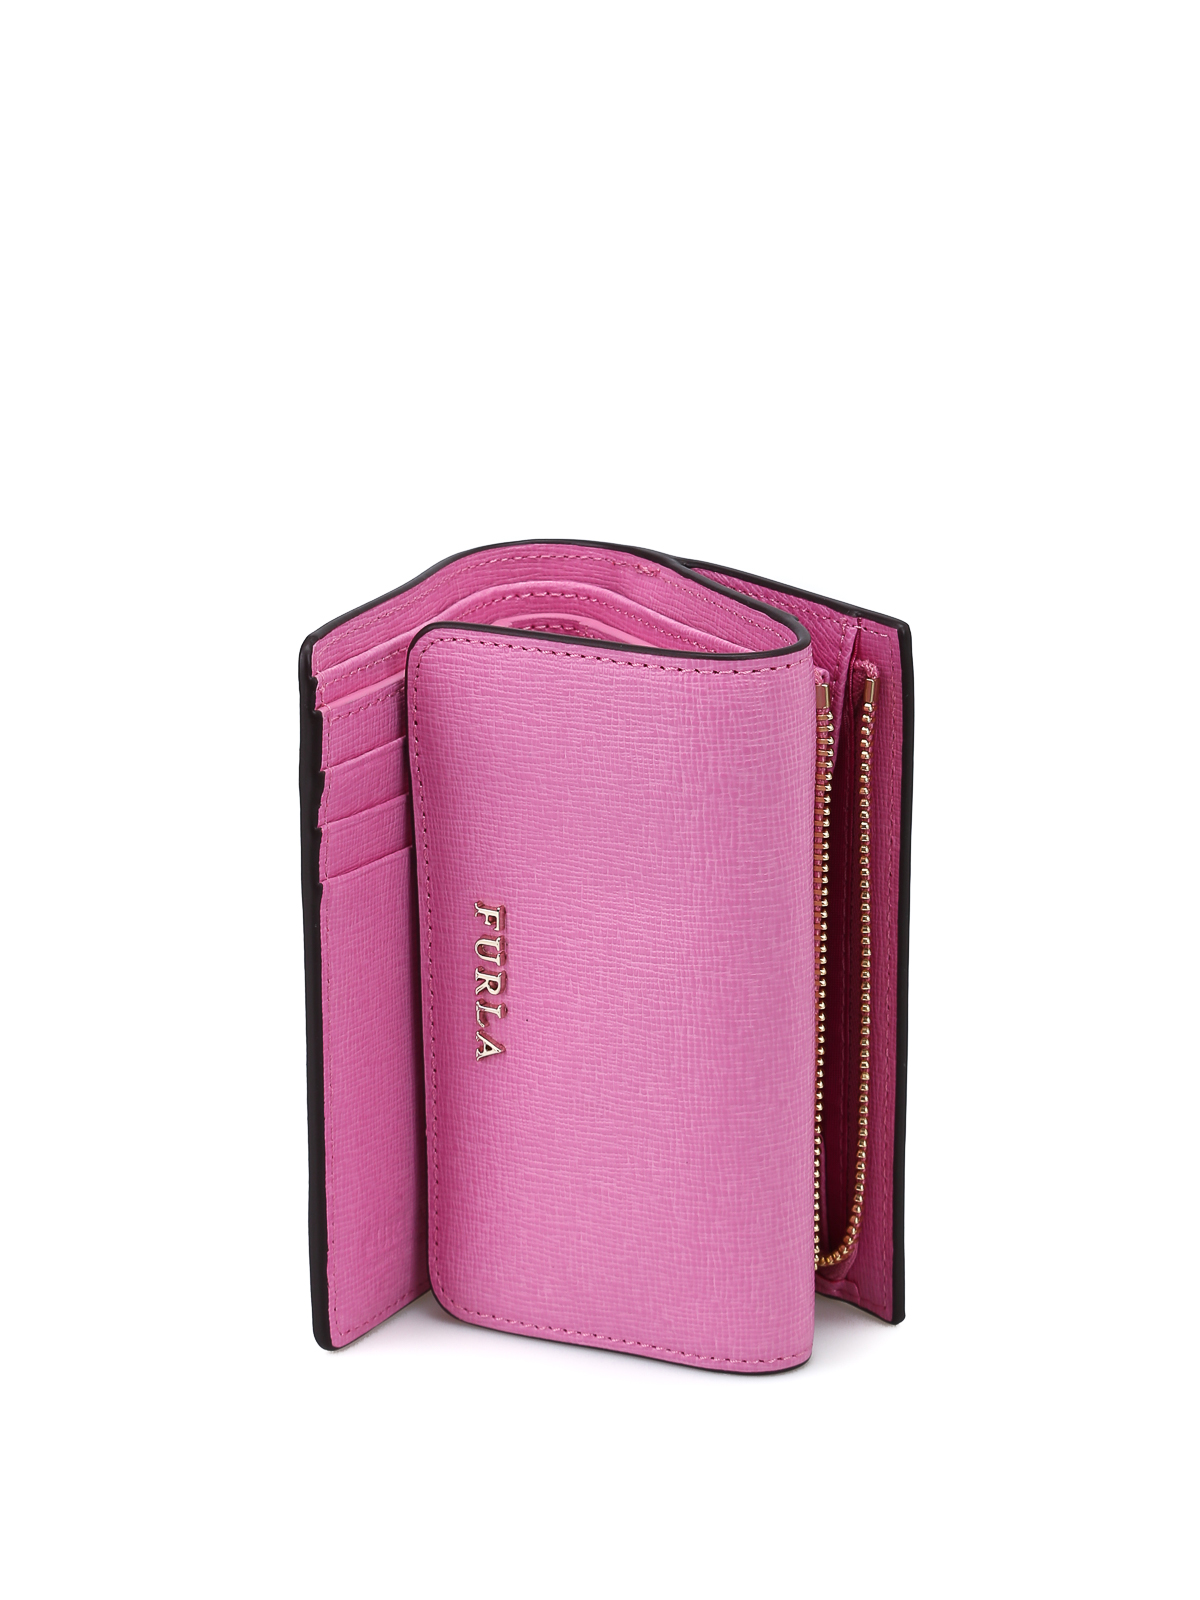 syndroom Delegeren Ellendig Wallets & purses Furla - Babylon small trifold pink wallet - 922577